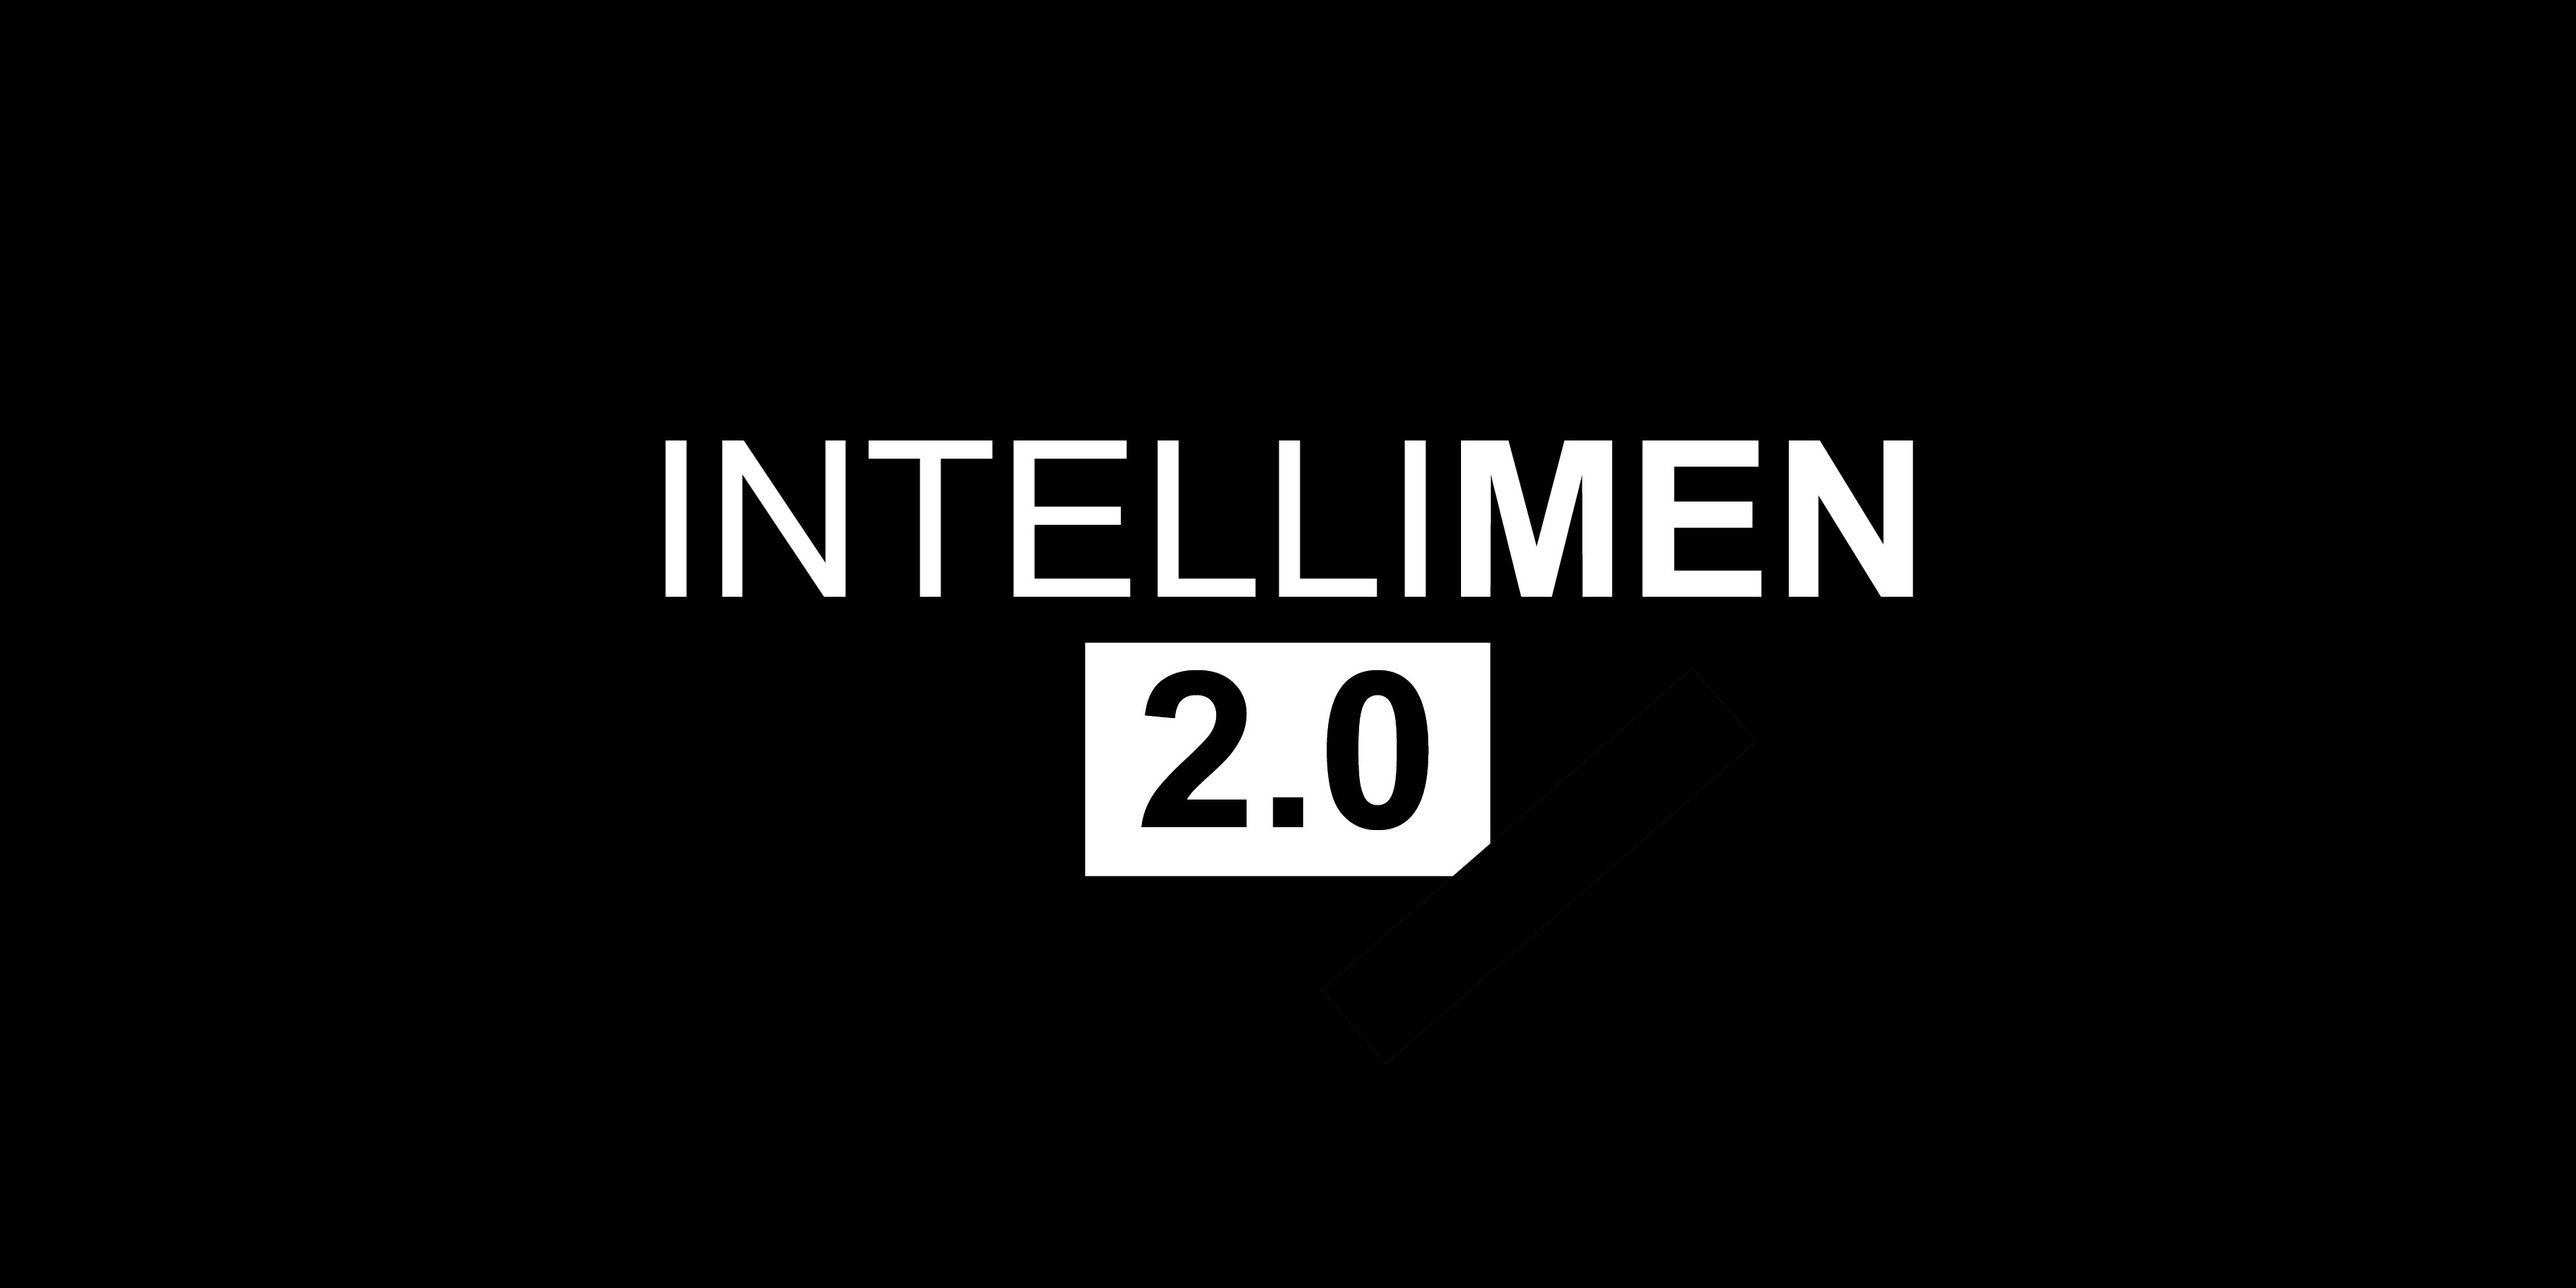 INTELLIMEN 2.0